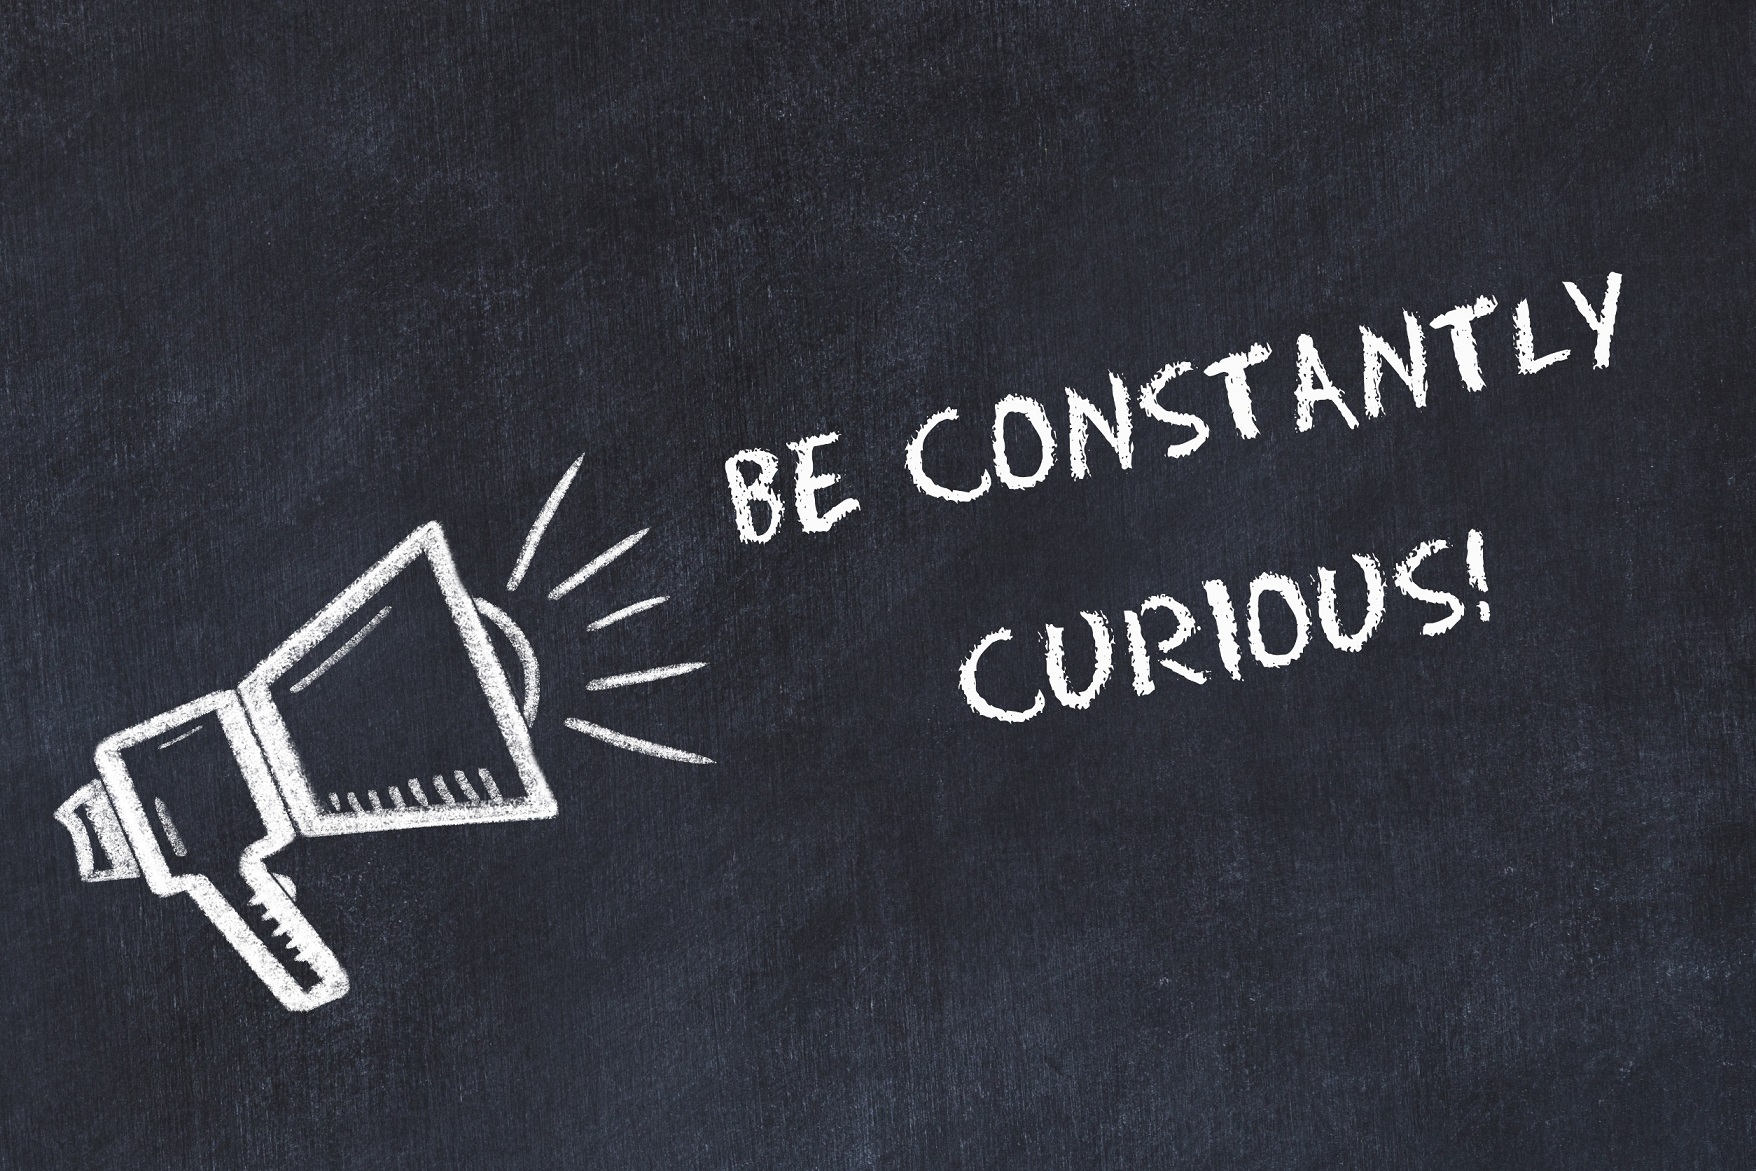 be-curious